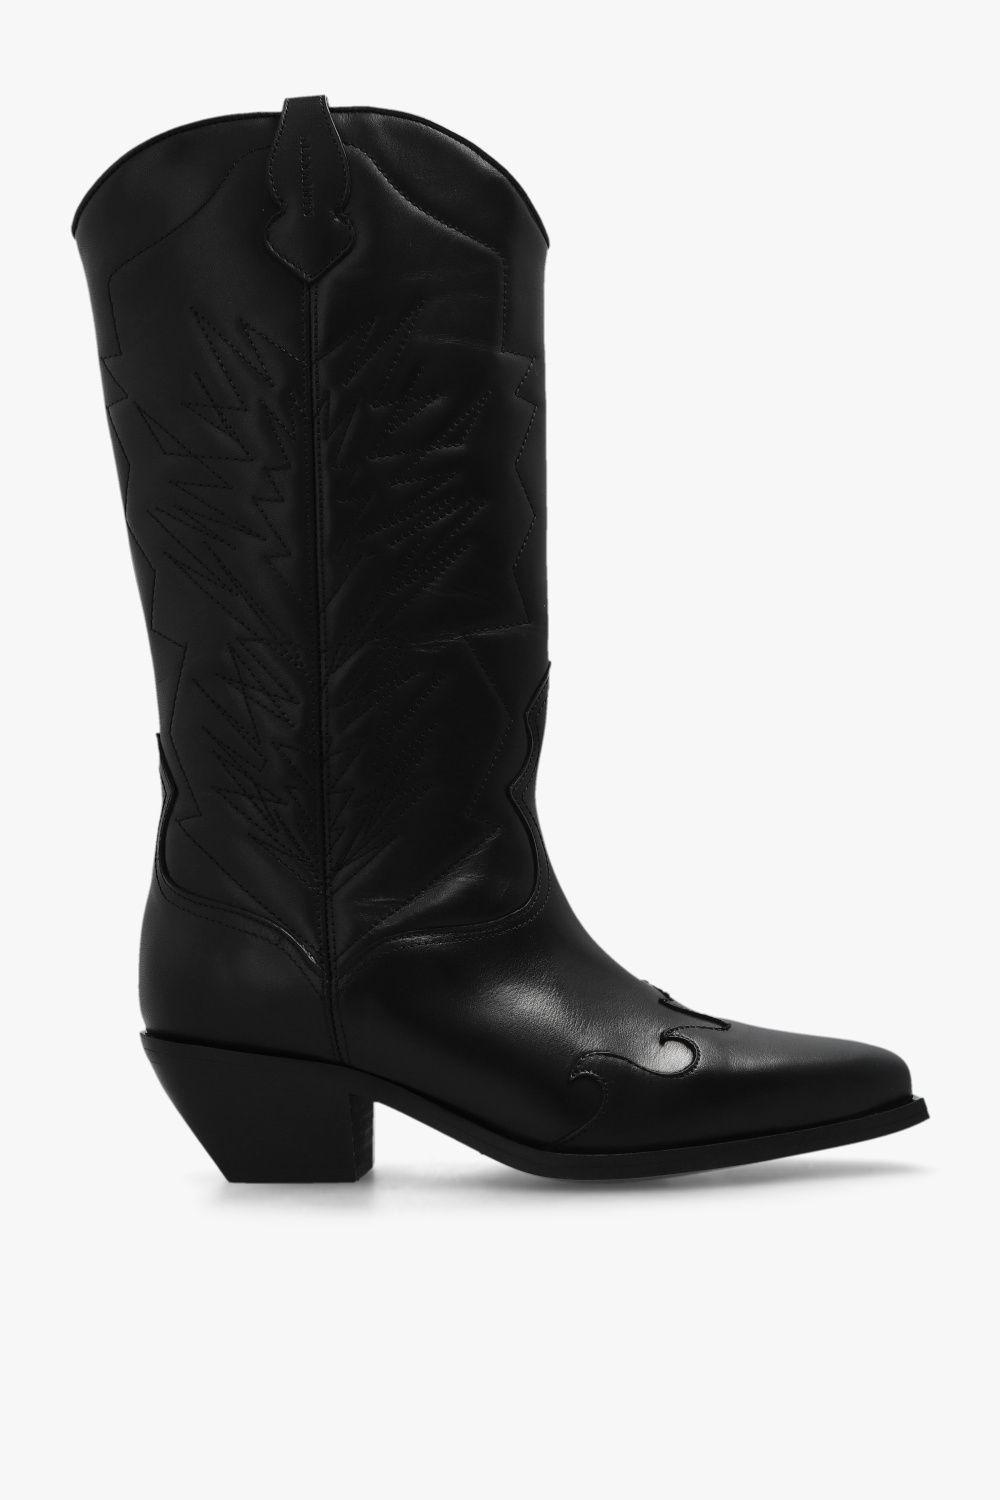 AllSaints 'kacey' Heeled Cowboy Boots in Black | Lyst